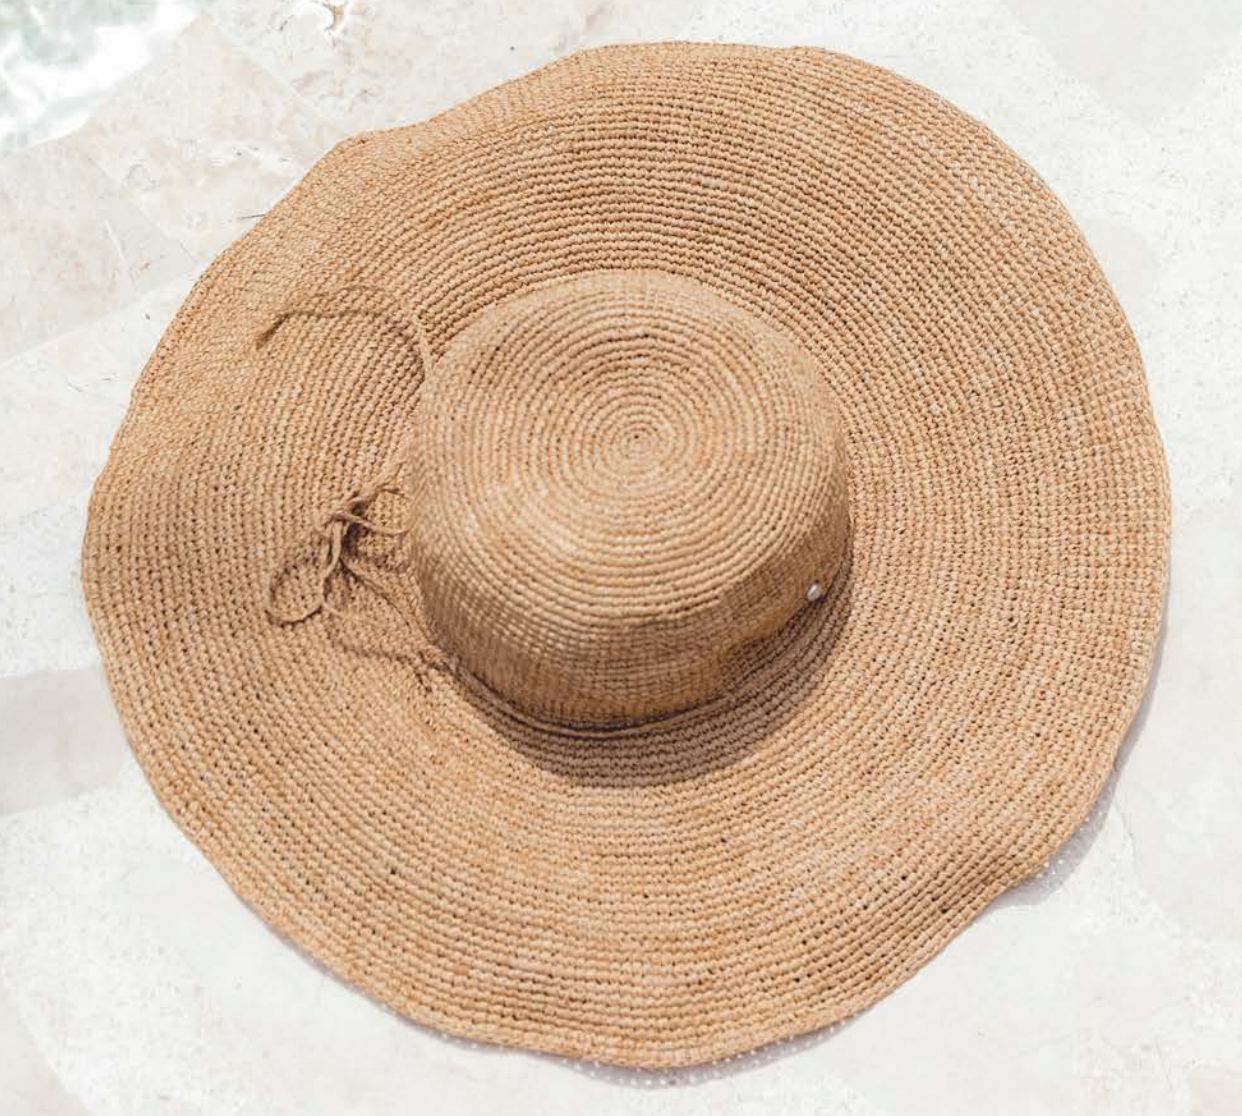 Neo Hat Capri - Premium Hats from Marina St Barth - Just $190.00! Shop now at Marina St Barth